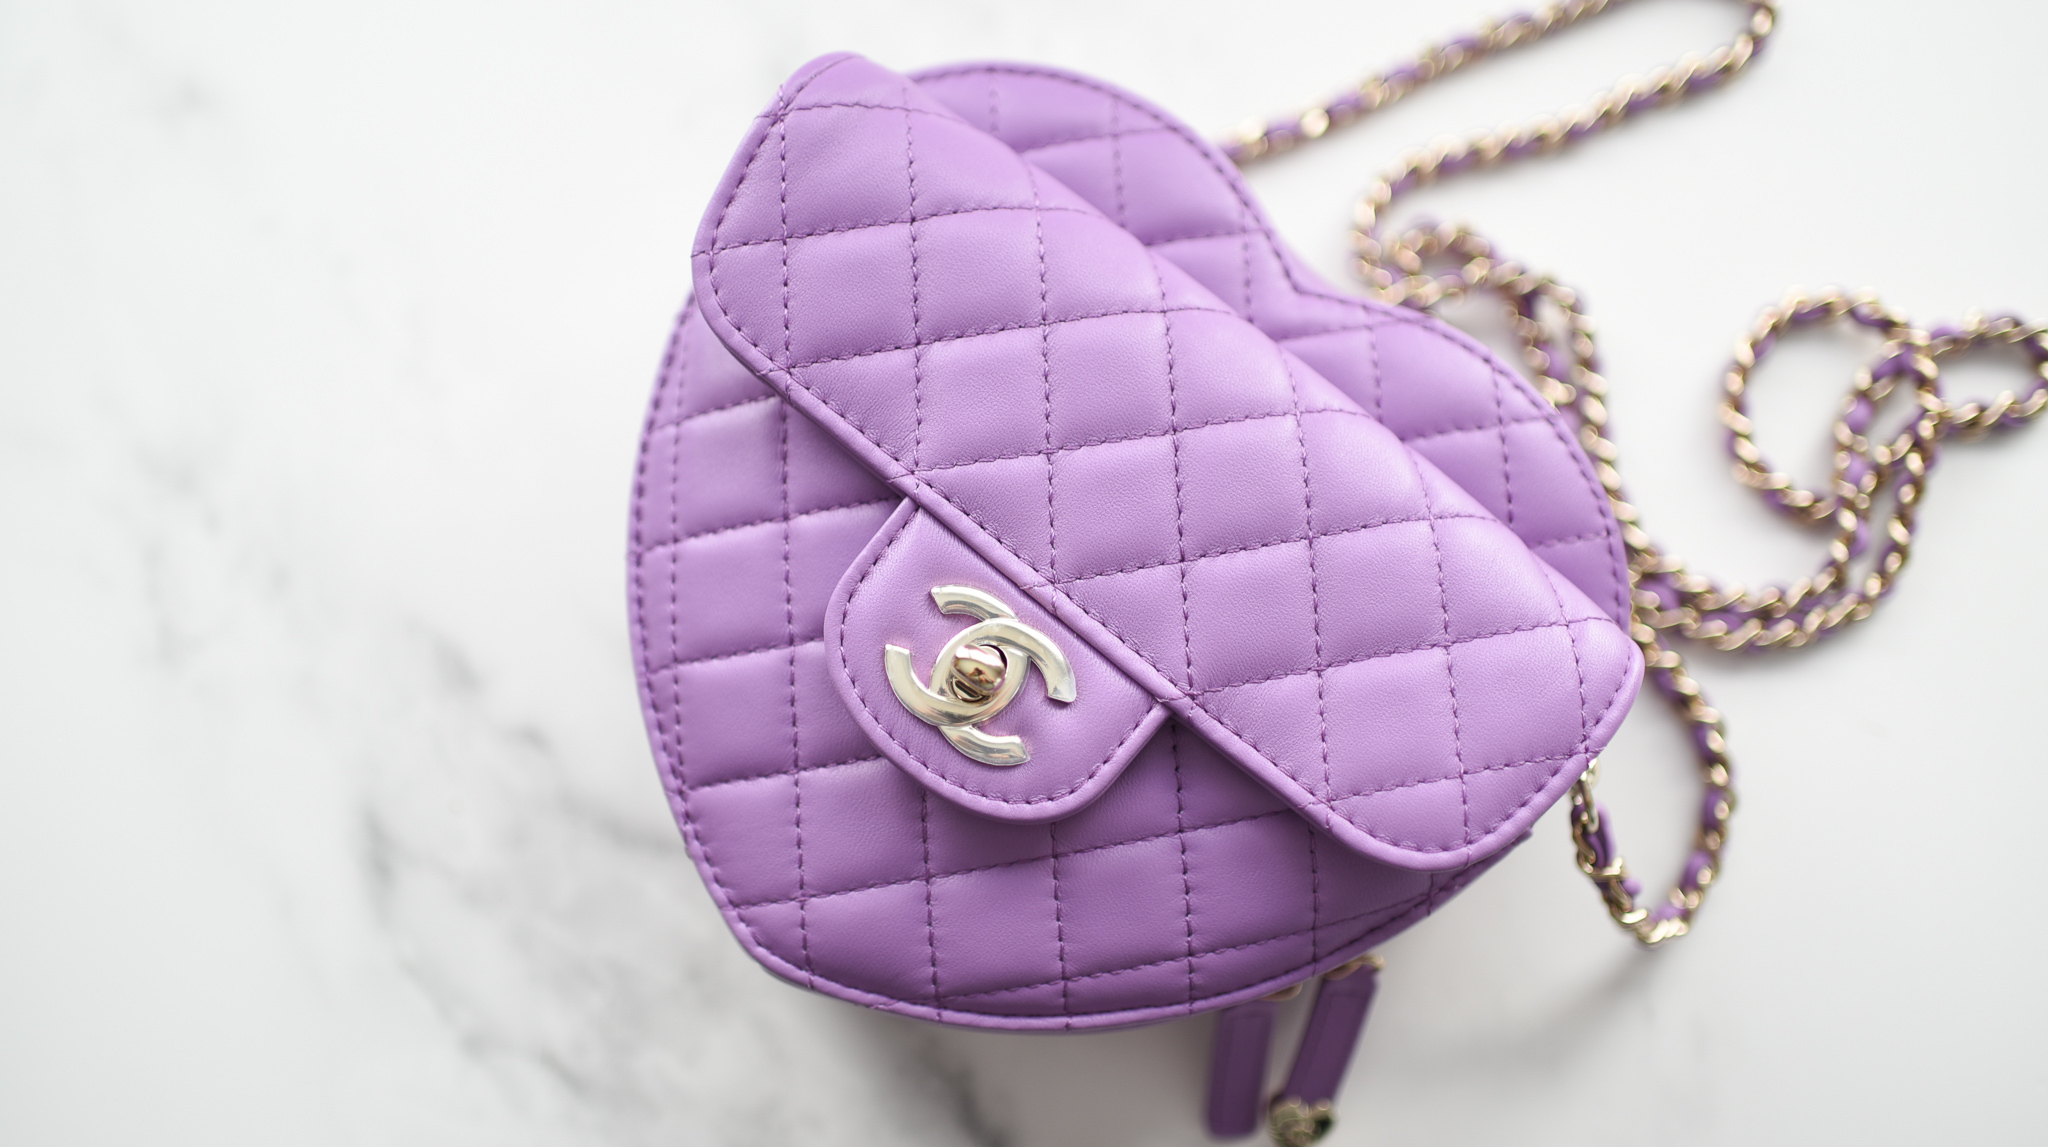 Chanel Heart Bag Large, Purple Lambskin Leather, Gold Hardware, New In Box  MA001 - Julia Rose Boston